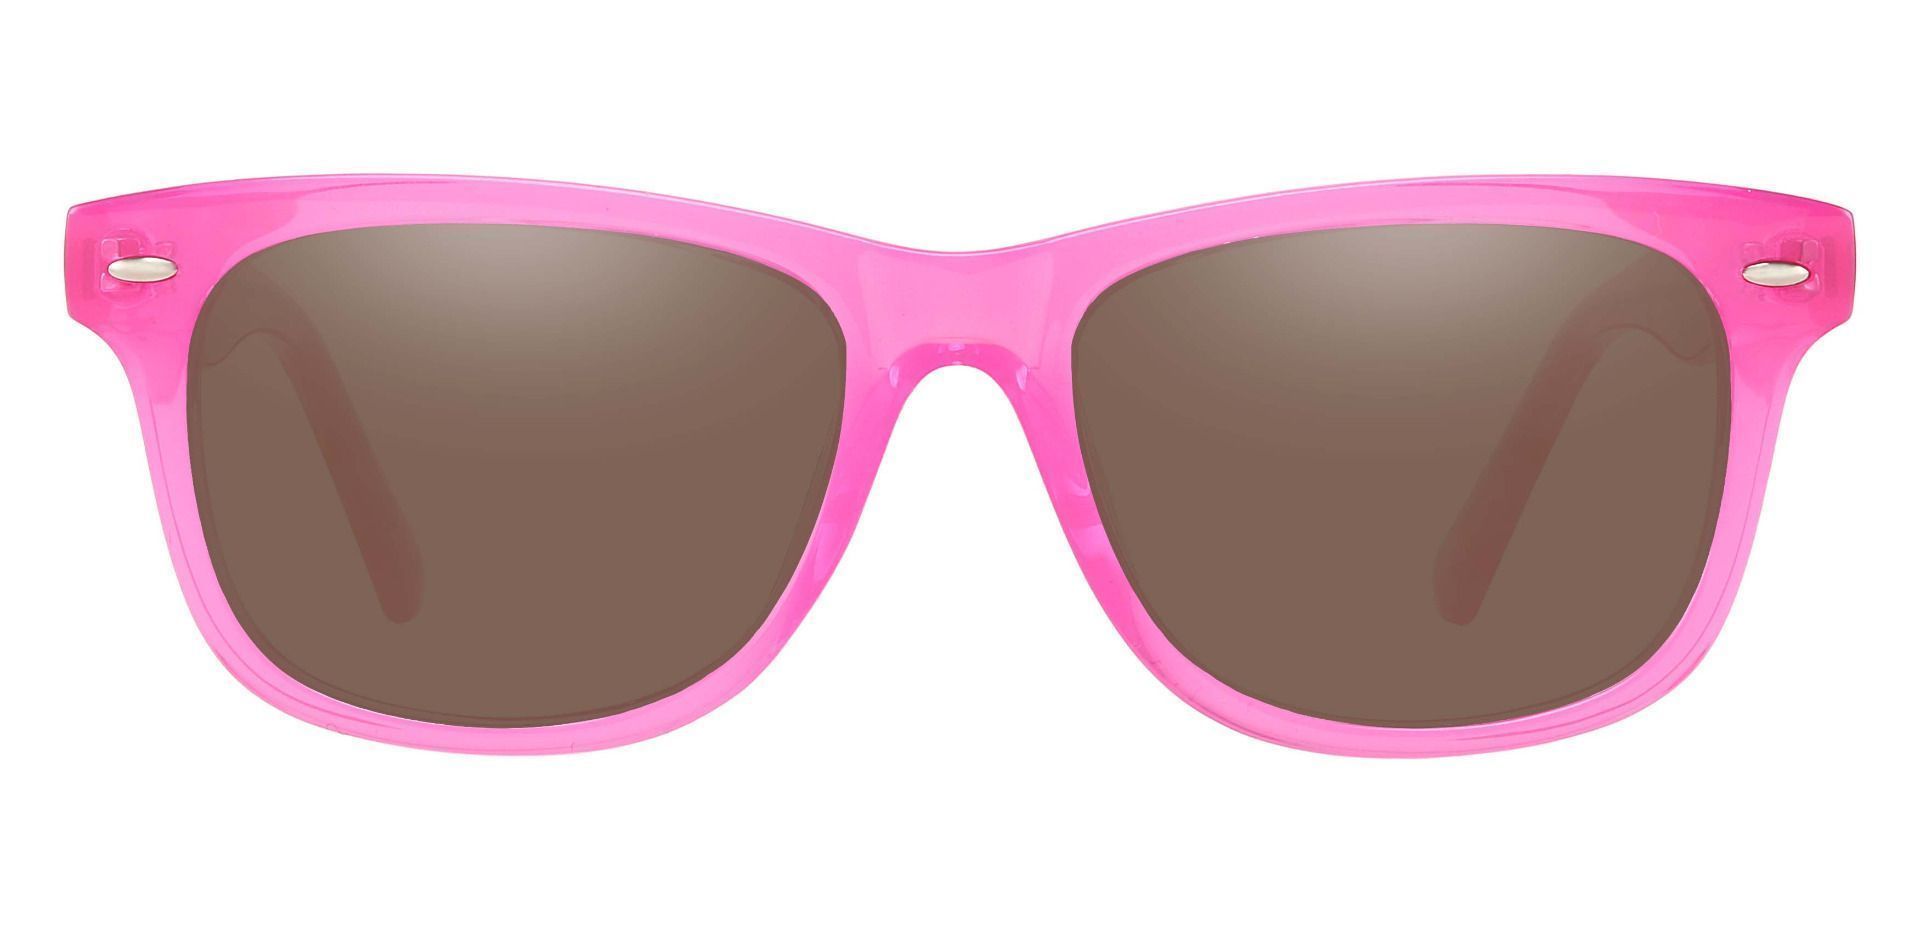 Eureka Square Prescription Sunglasses - Pink Frame With Brown Lenses